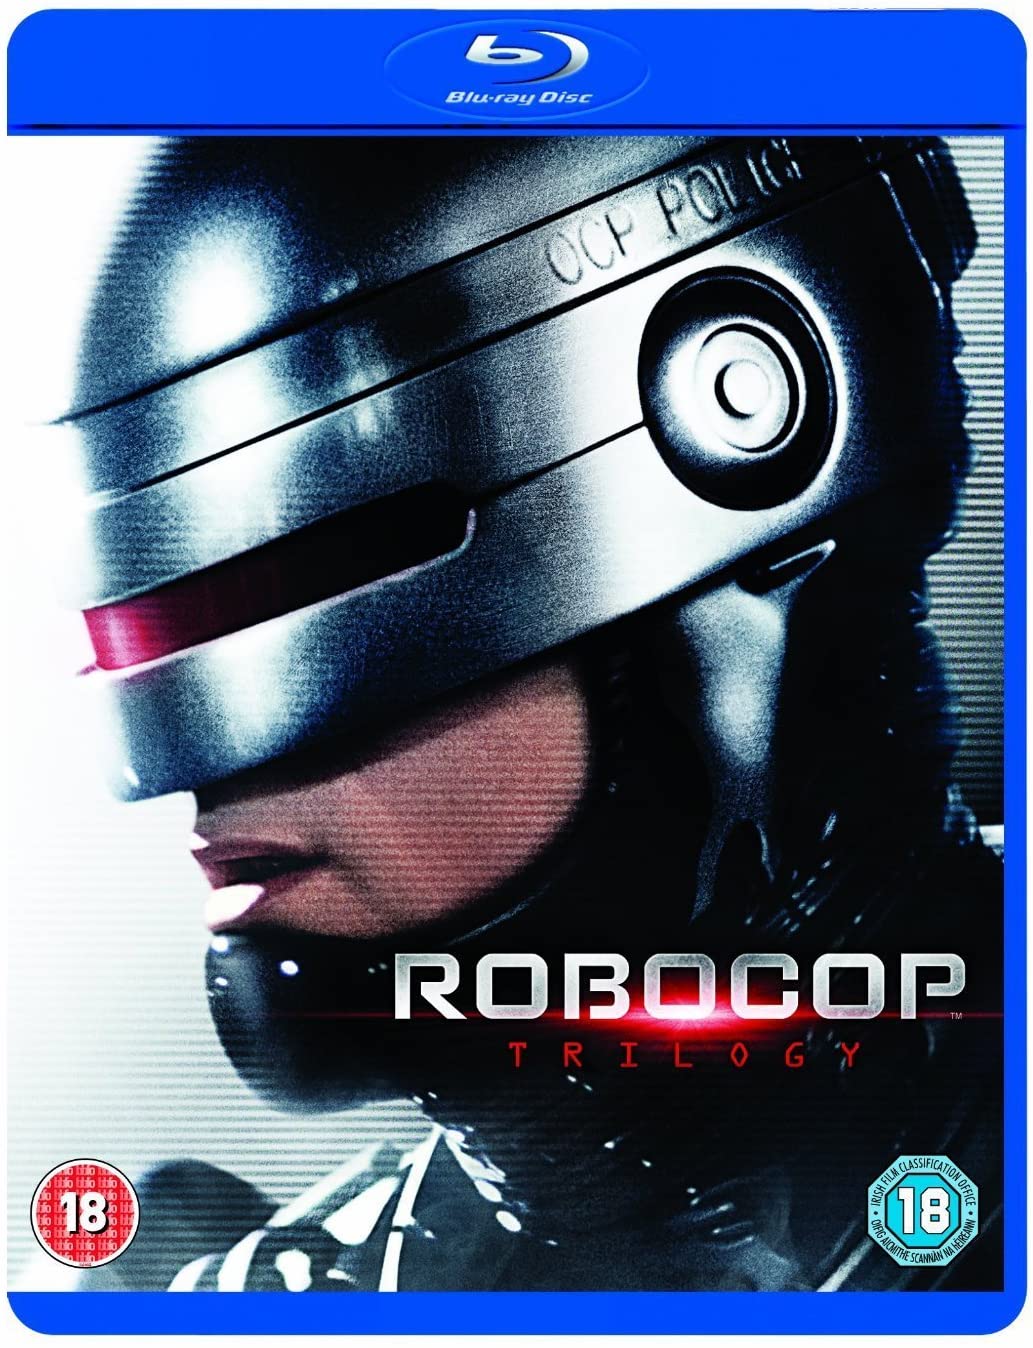 Robocop-trilogie [Remastered] [Blu-ray] [Regiovrij]